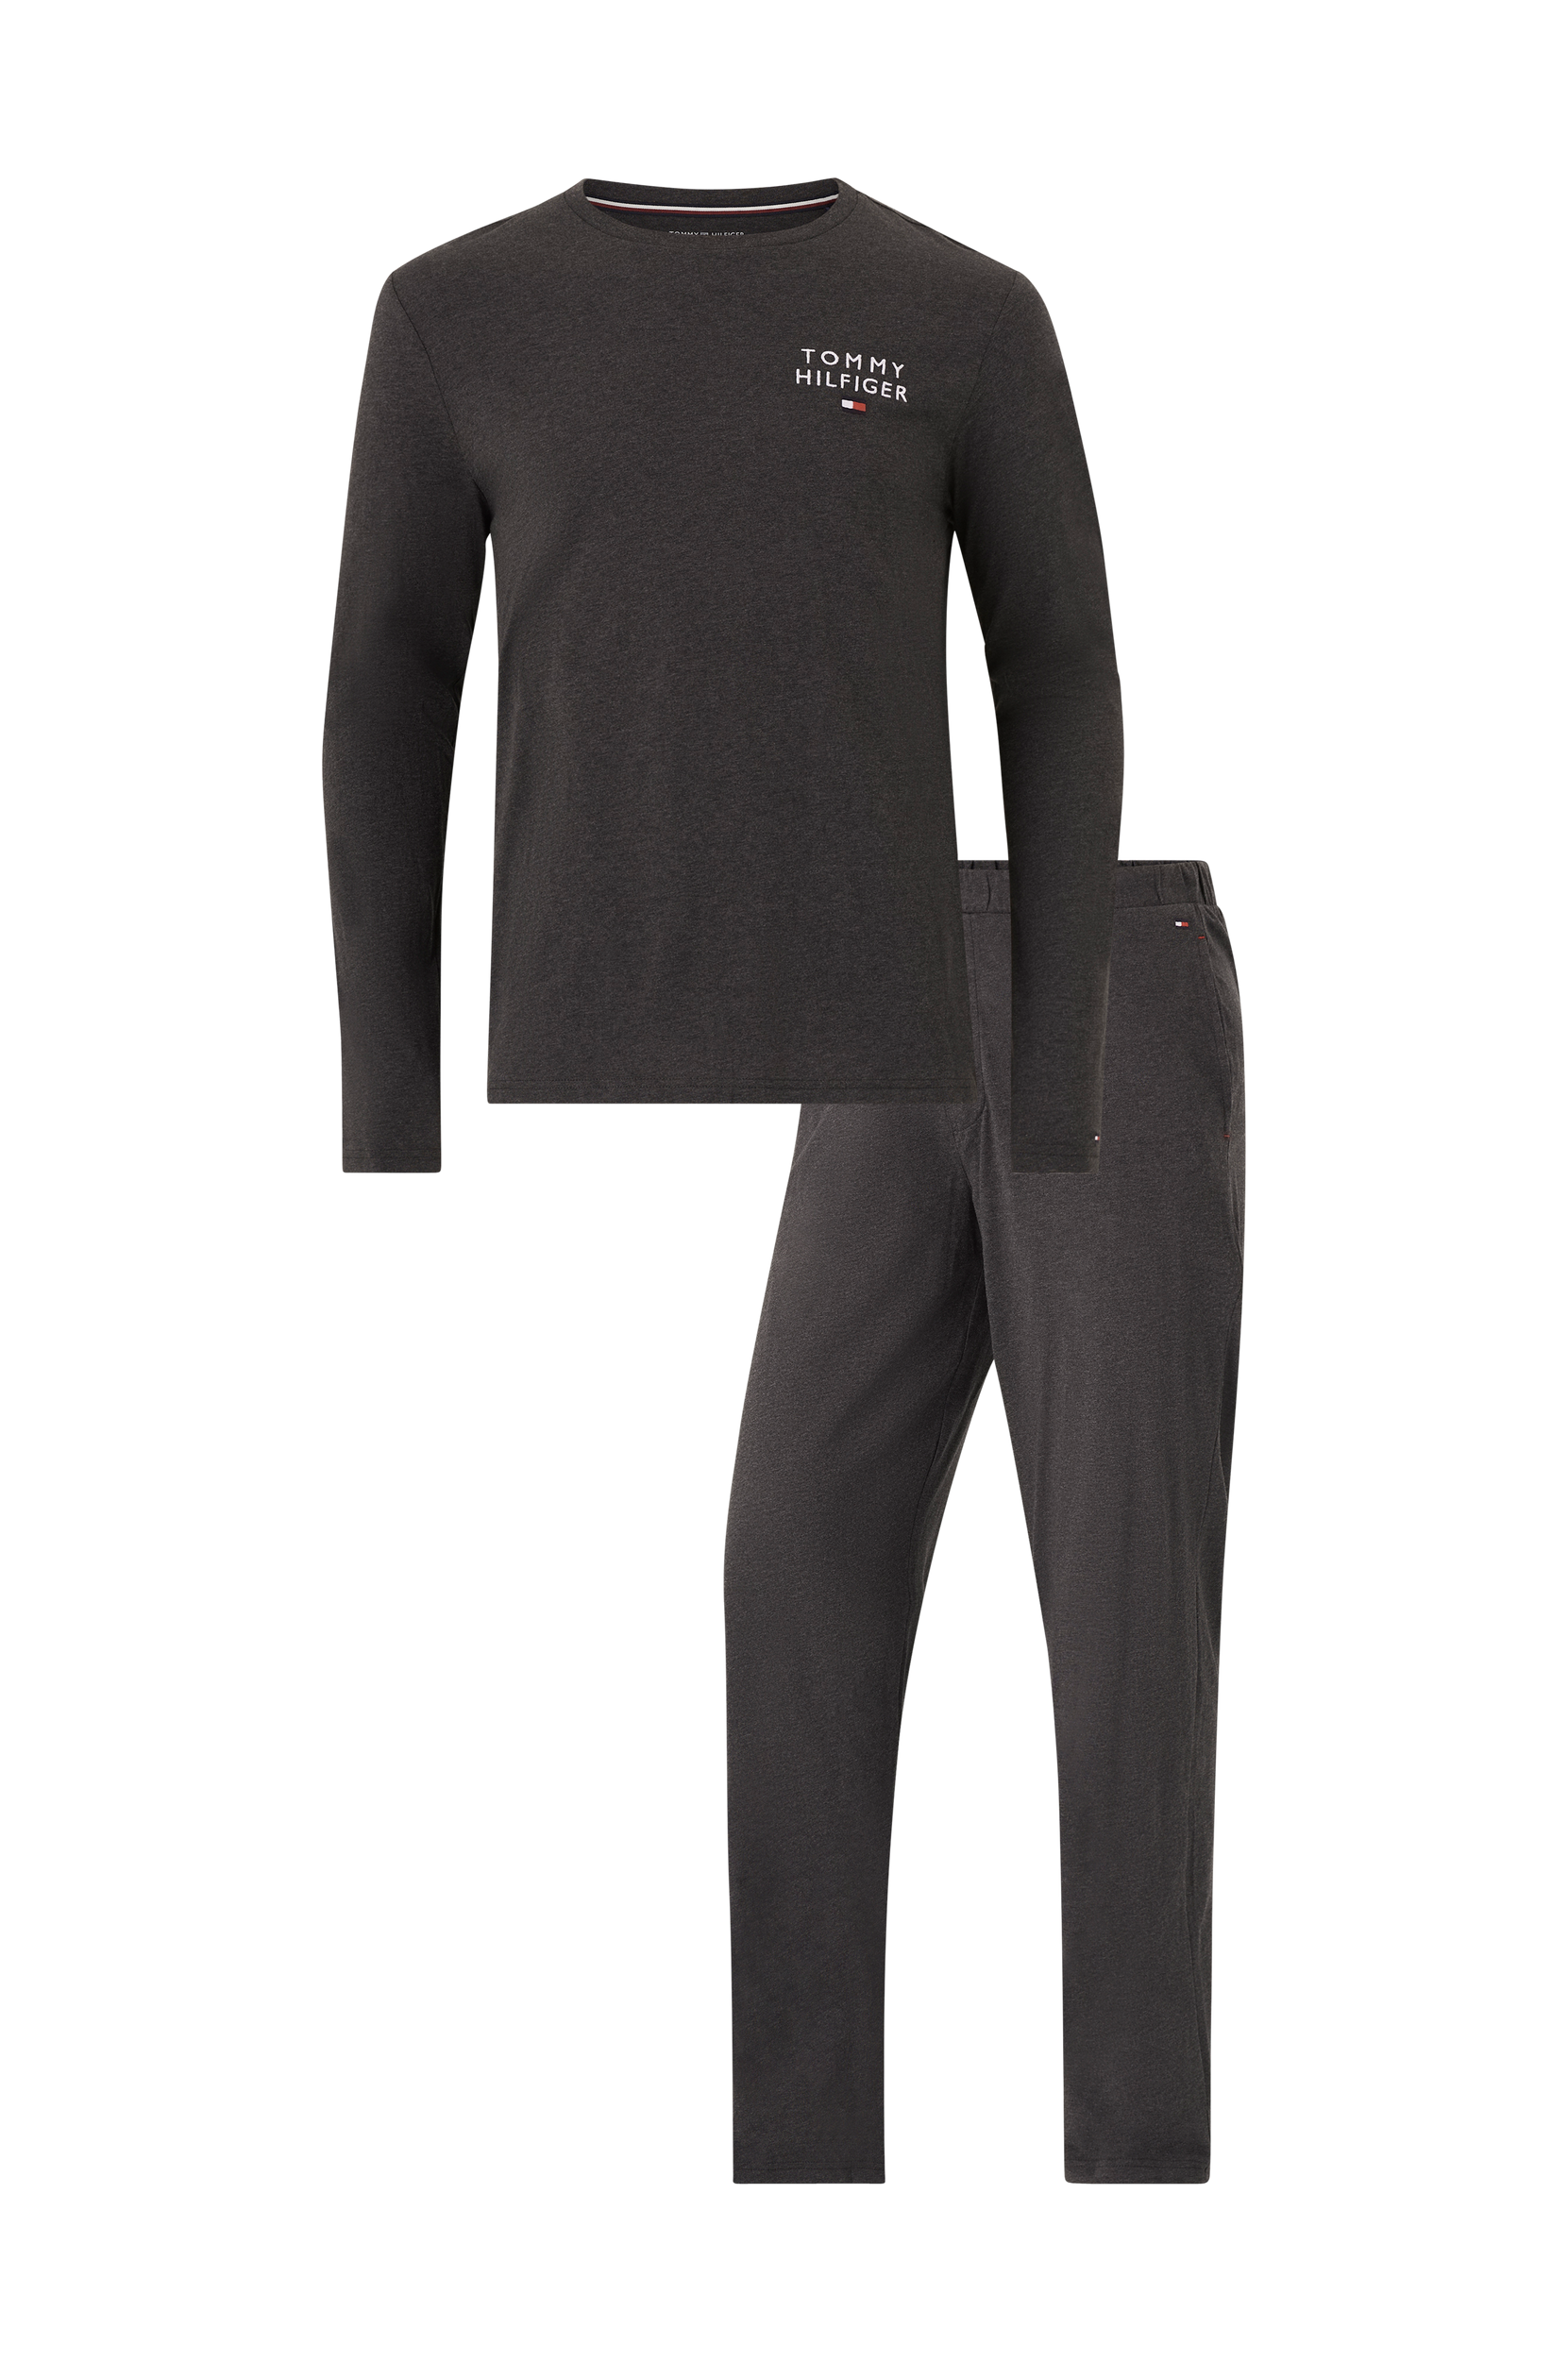 Hilfiger - Pyjamas LS PJ Set Jersey Self Fabric WB - XL - Nattøj - Tøj til mænd (31346990)